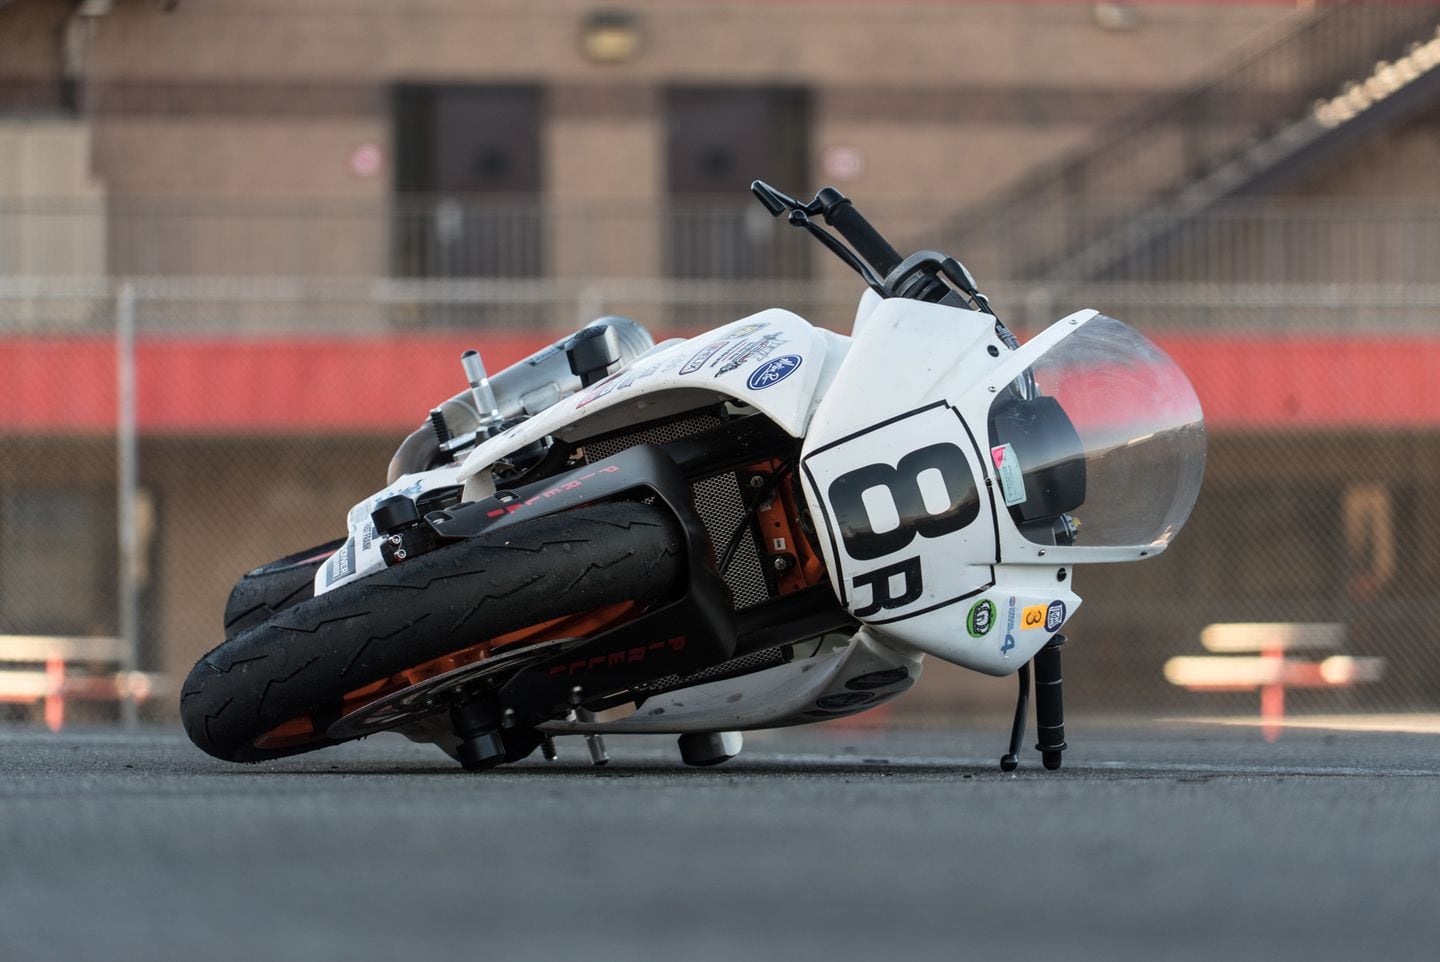 bond Hubert Hudson loose the temper Frame Sliders for the KTM RC390 | Motorcyclist